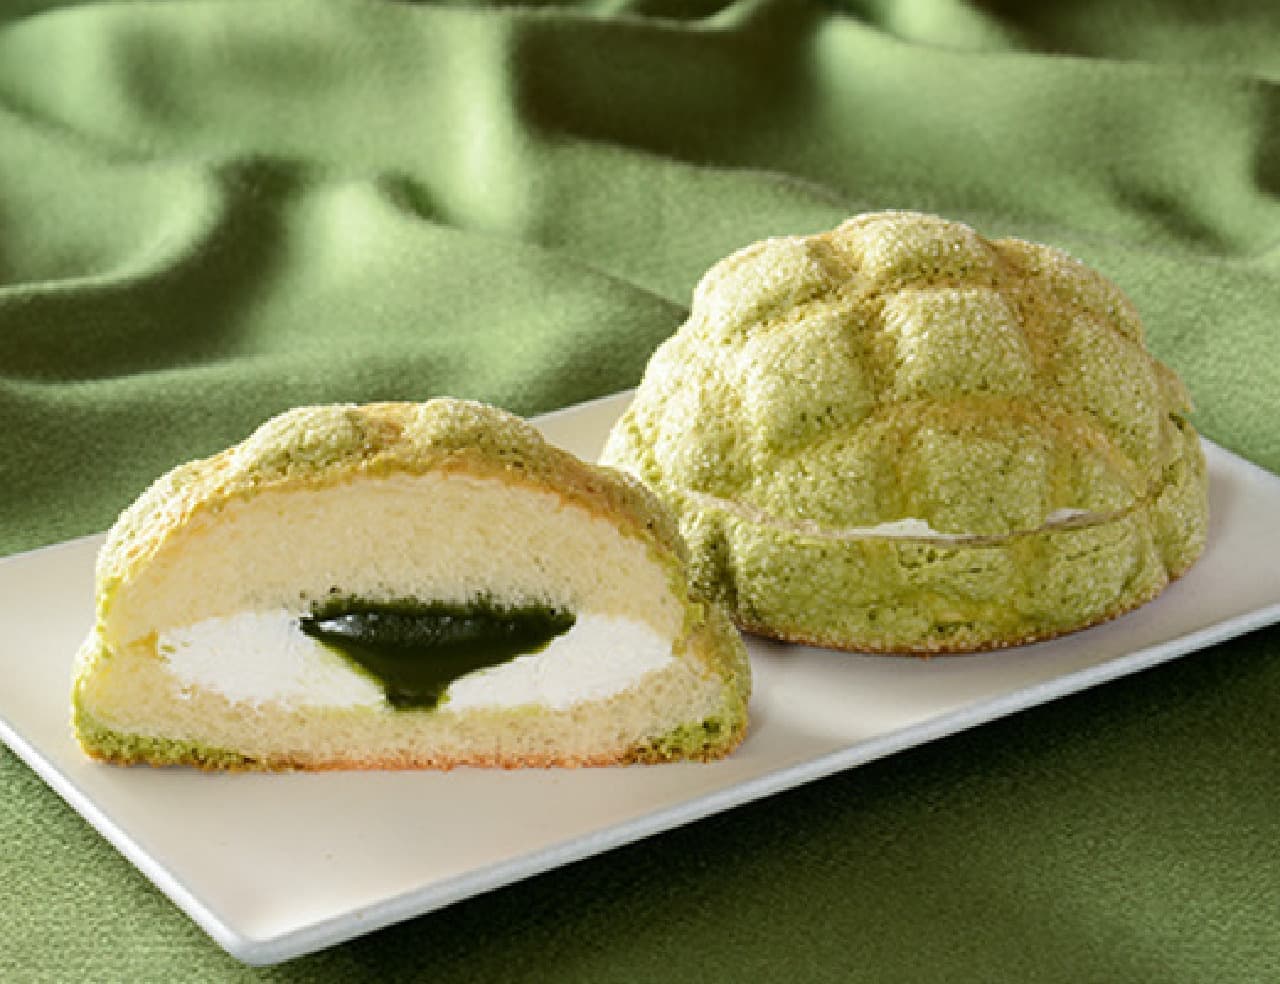 LAWSON "Morihan Omatcha Melon Pan with Whipped Green Tea and Green Tea Cream".